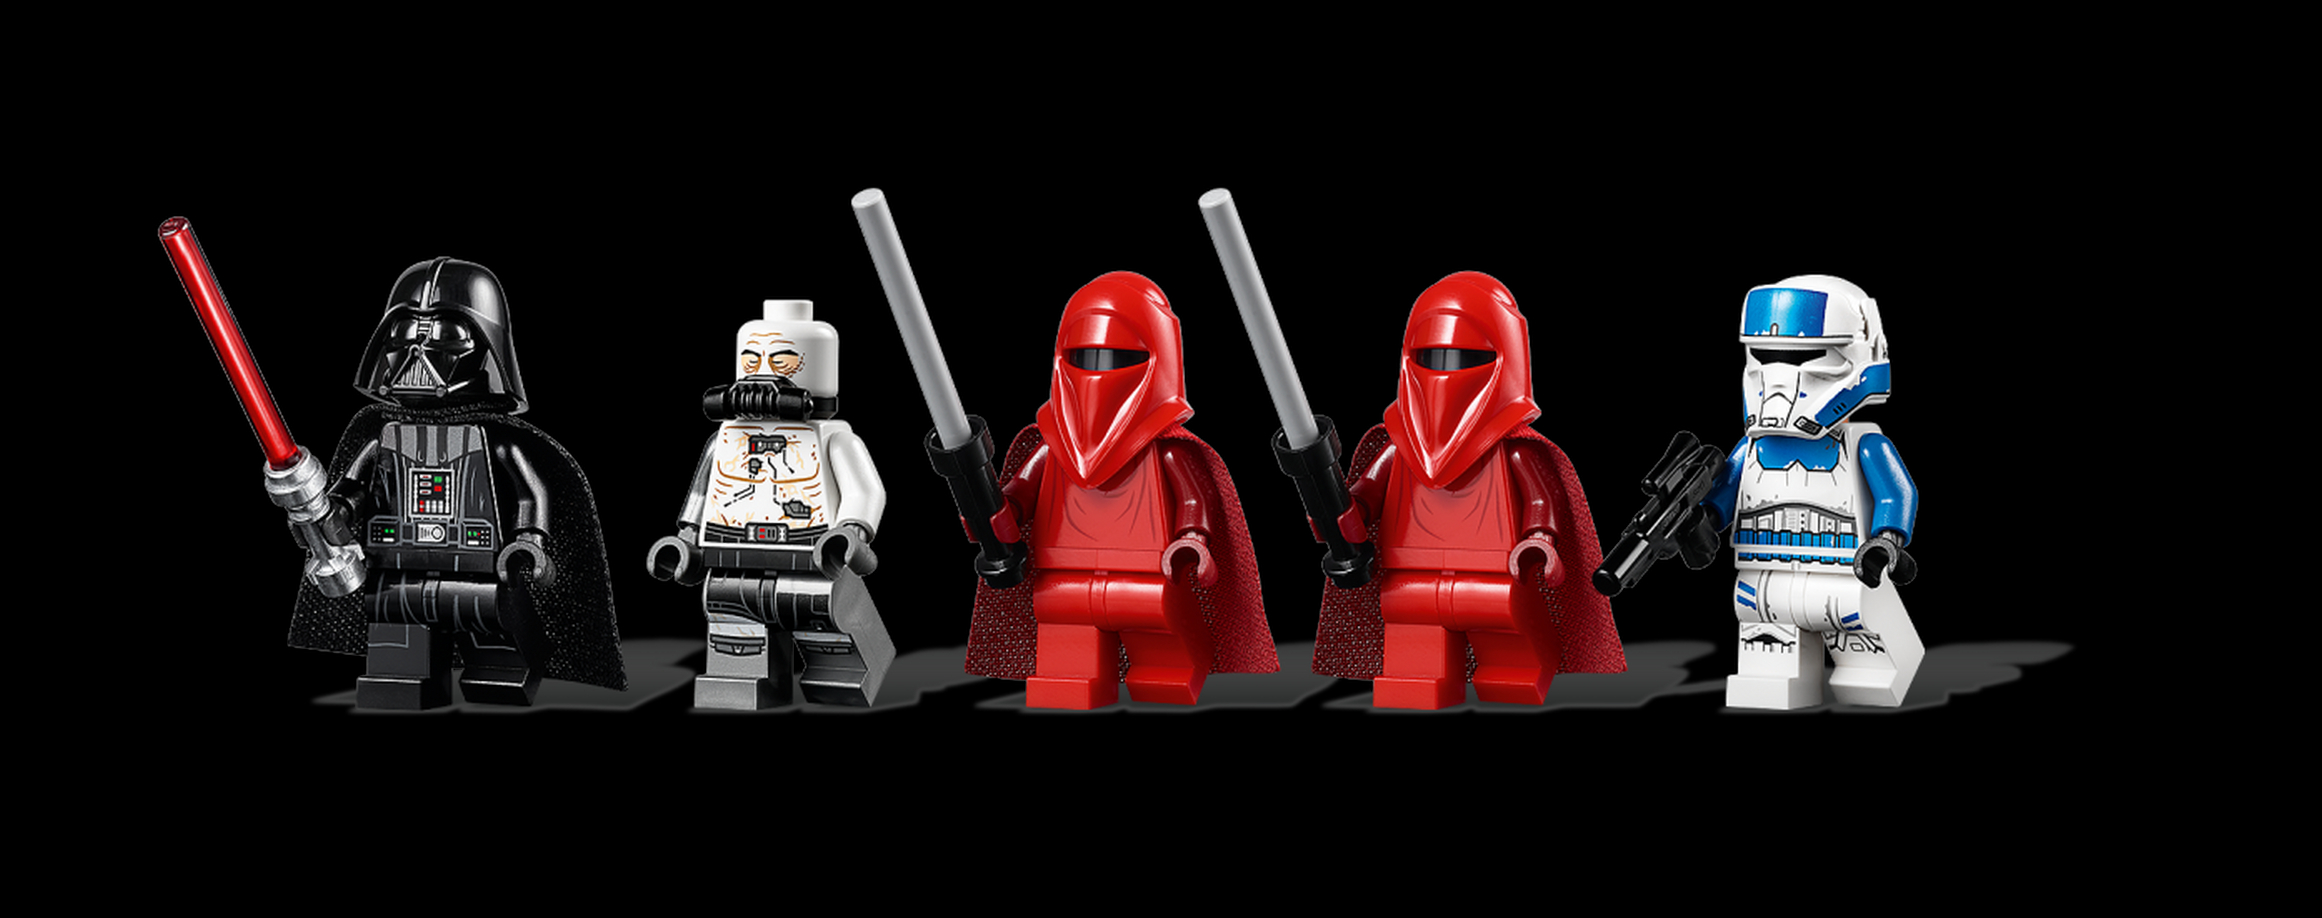 from 75251 LEGO® Star Wars™ Darth Vader Bacta Minifig